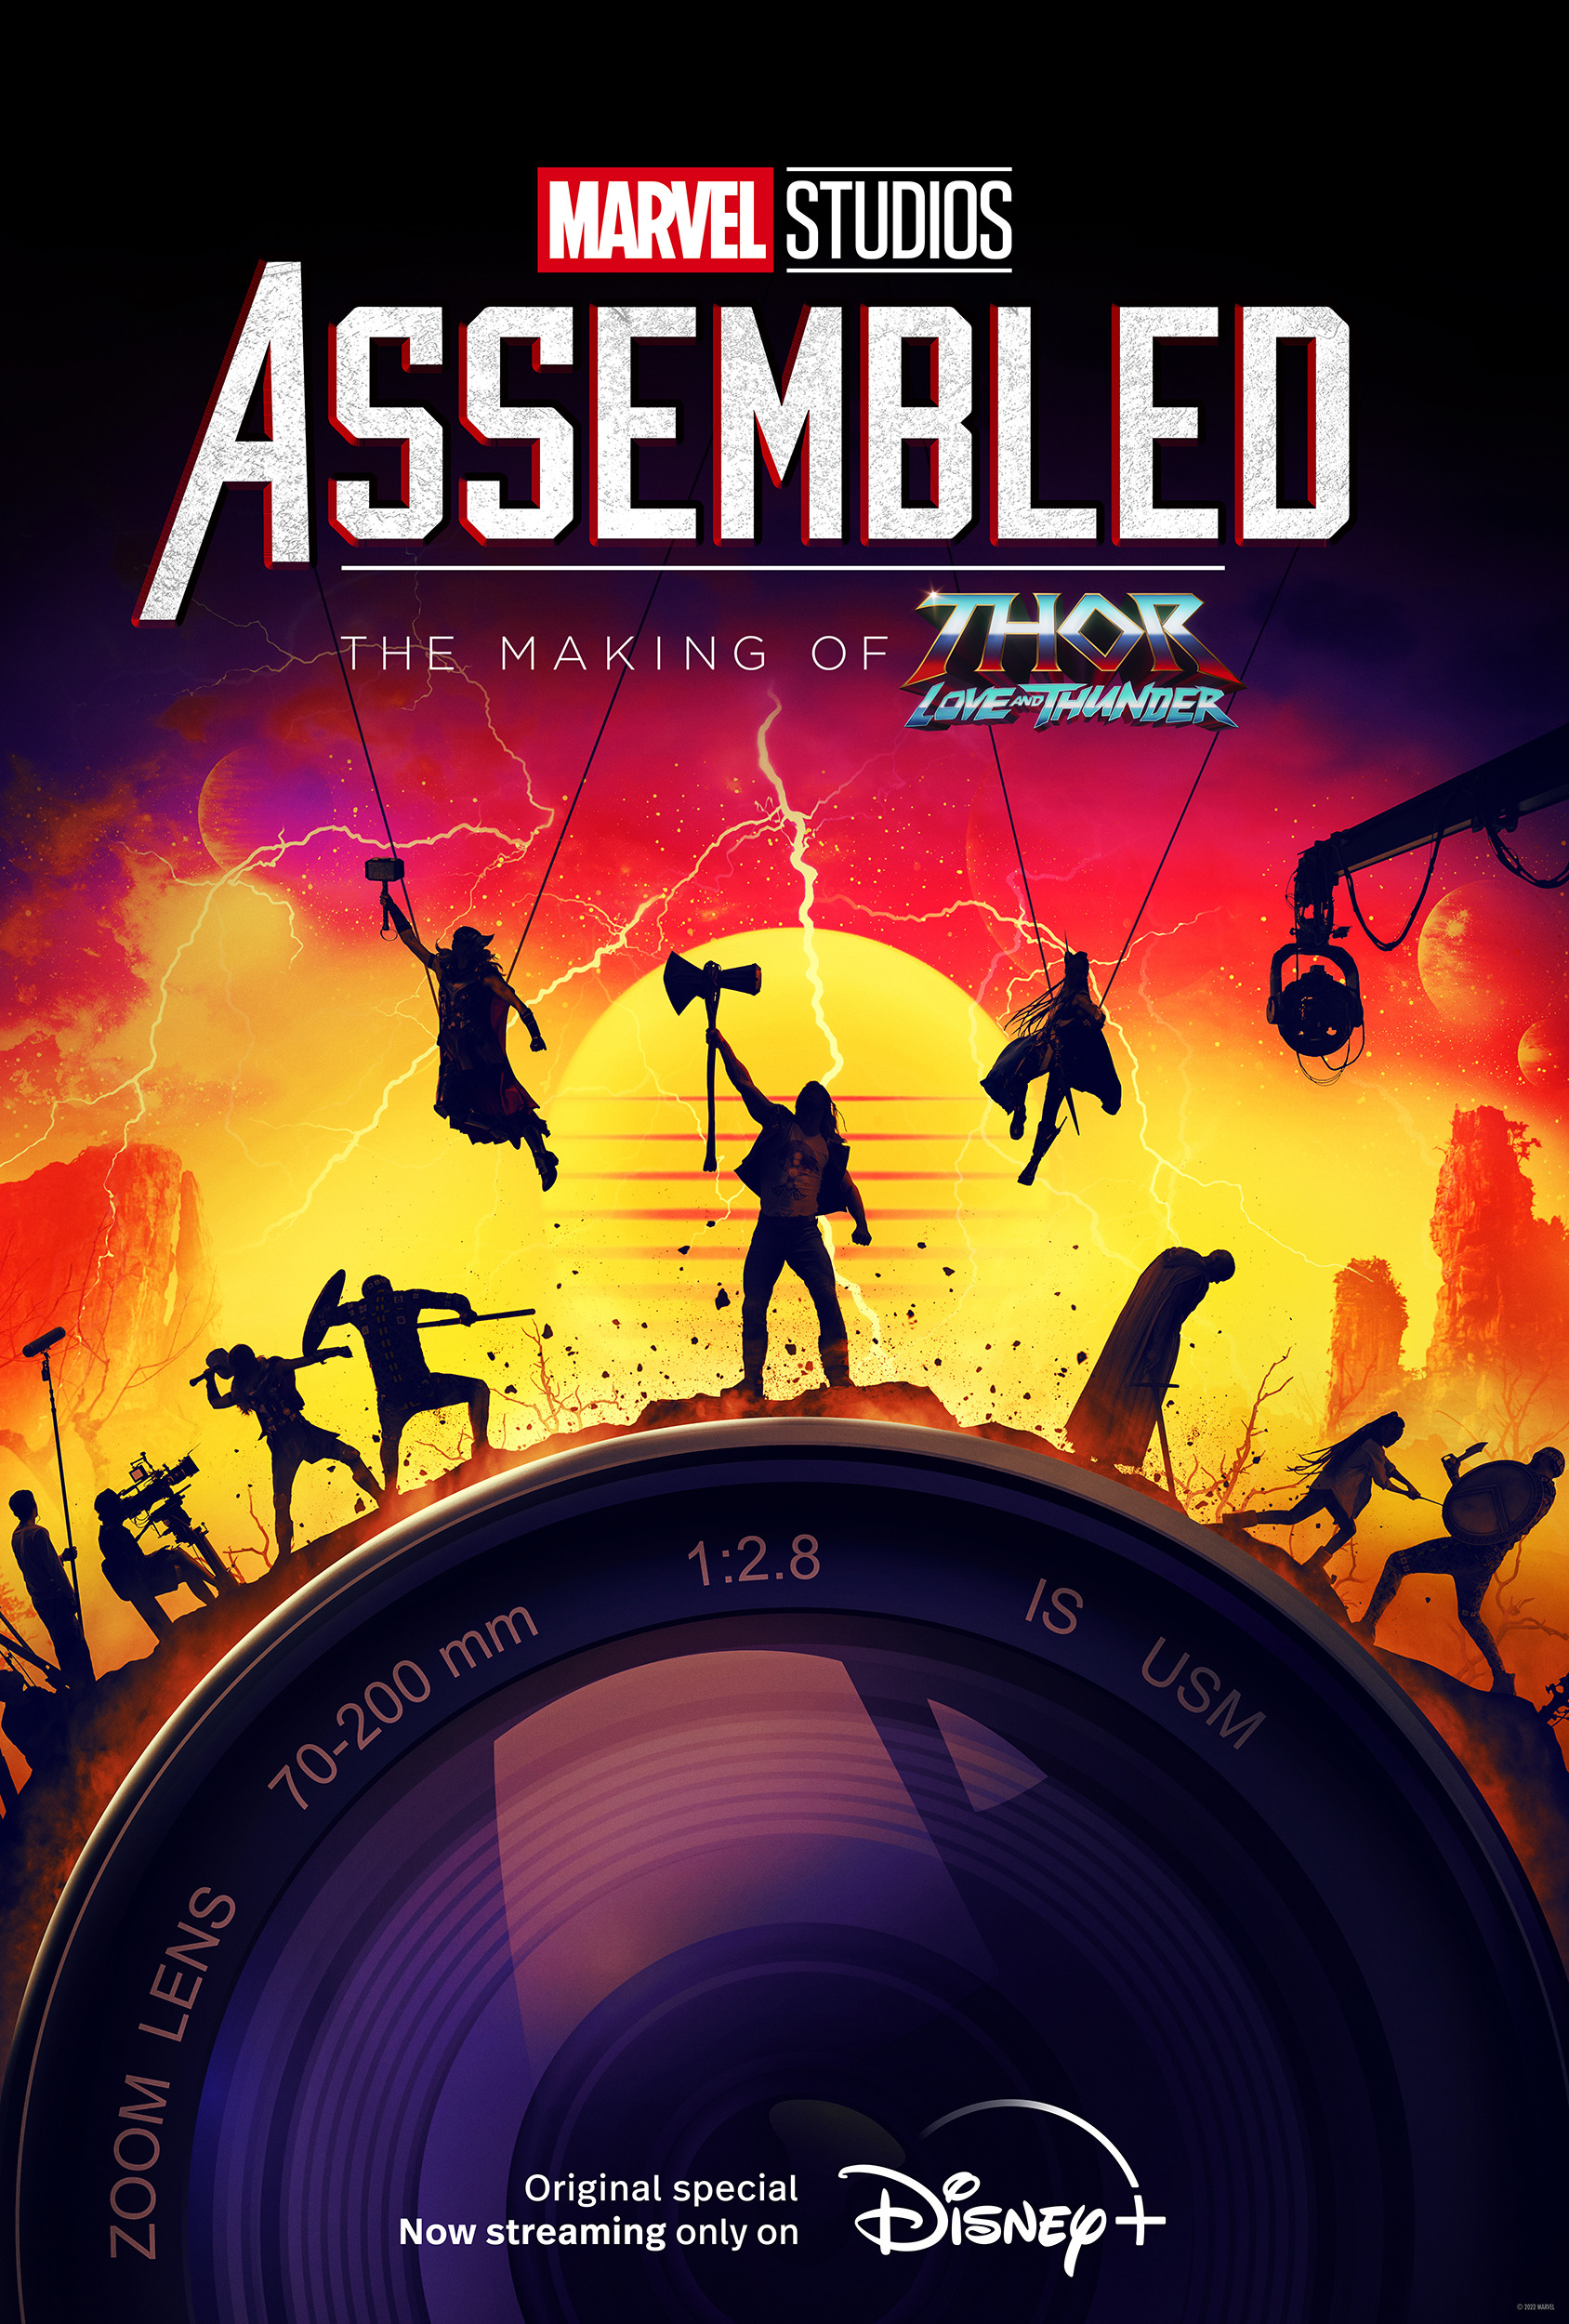 Mega Sized TV Poster Image for Marvel Studios: Assembled (#12 of 21)